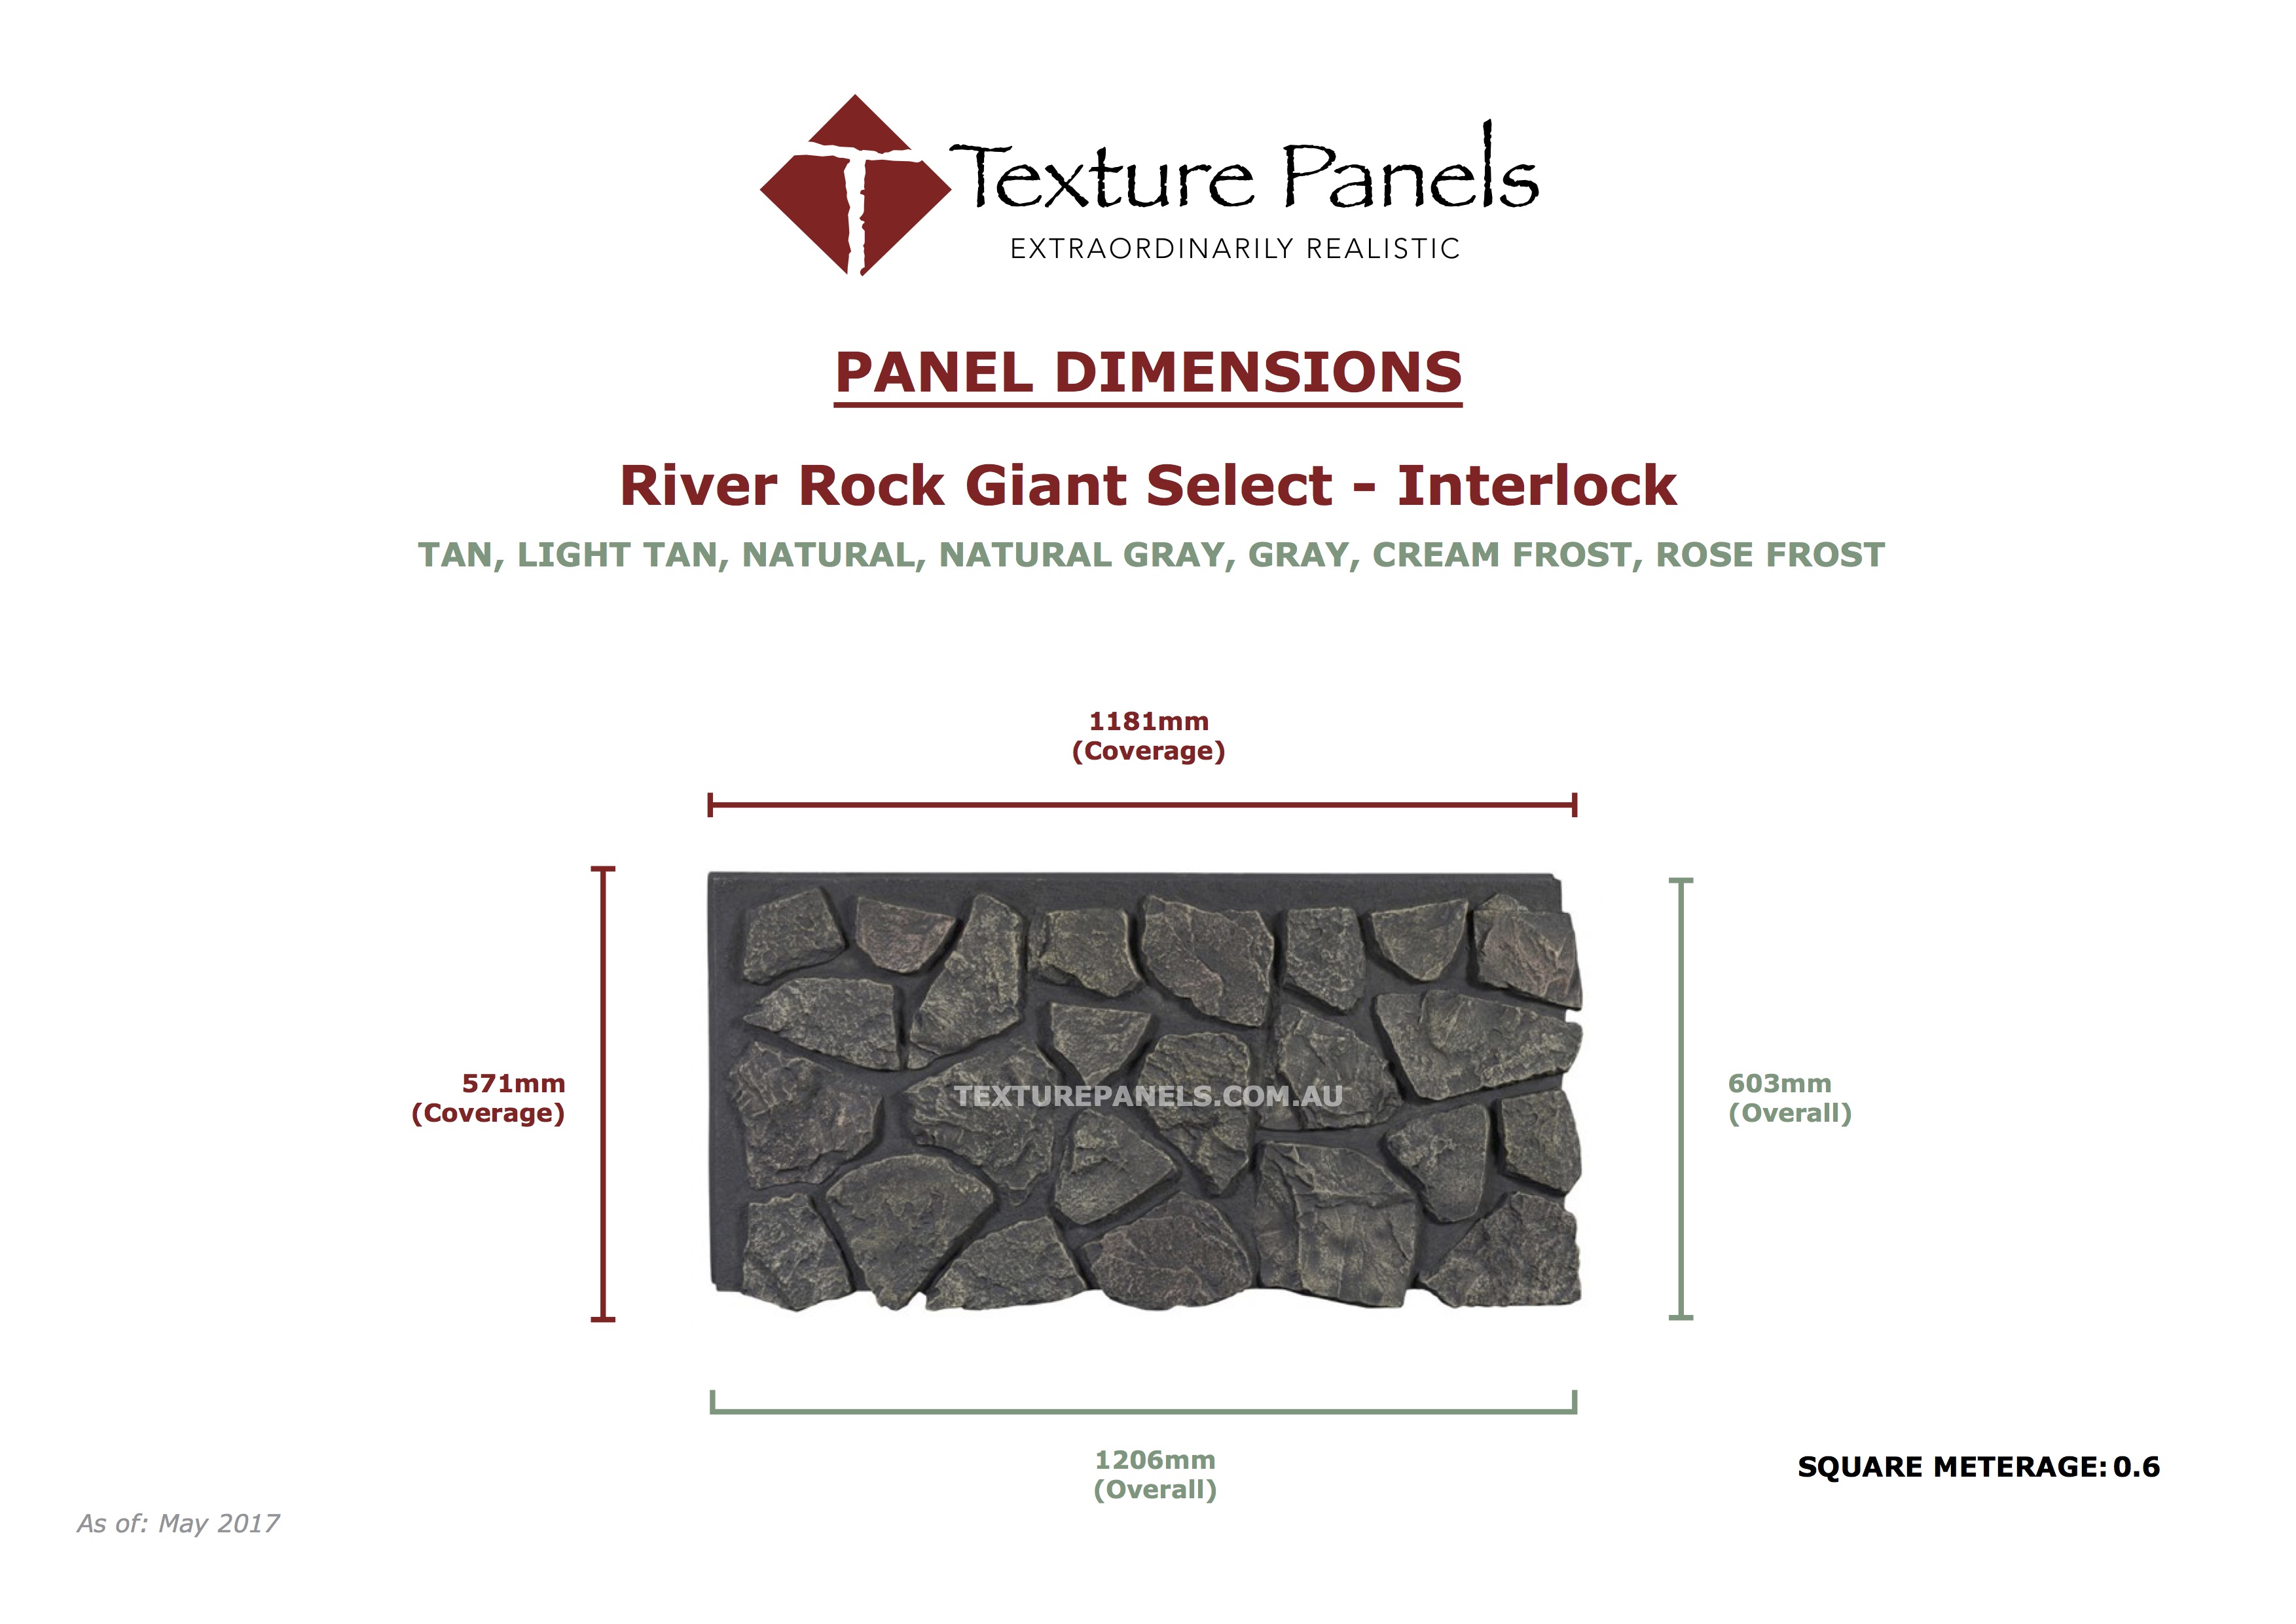 River Rock Giant Interlock